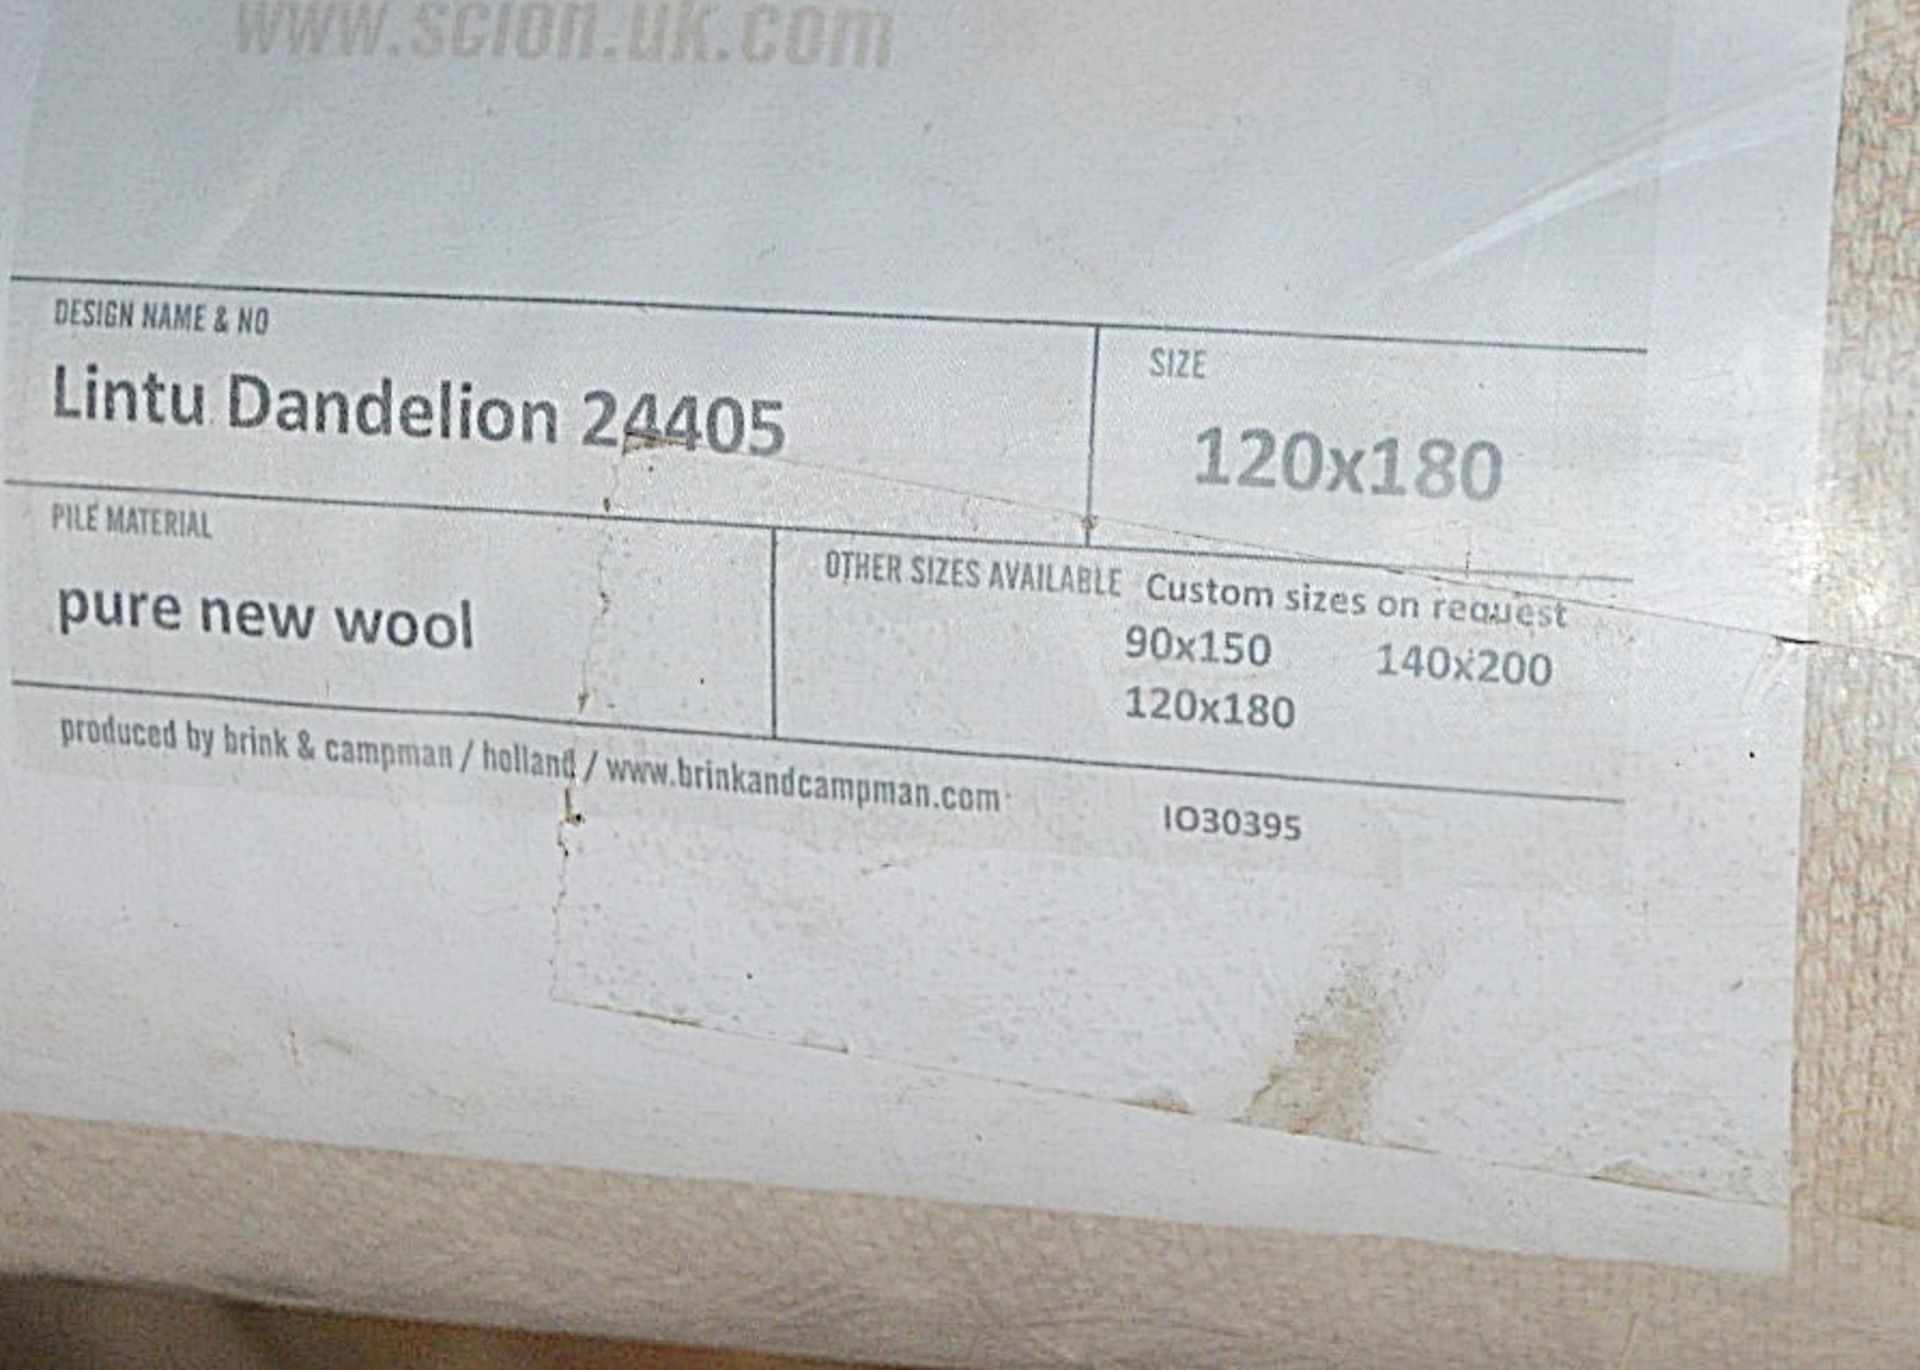 1 x Scion 'Lintu Dandelion' 100% Wool Designer Rug - Handmade In India - 120x180cm - RRP £299.00 - Image 6 of 6